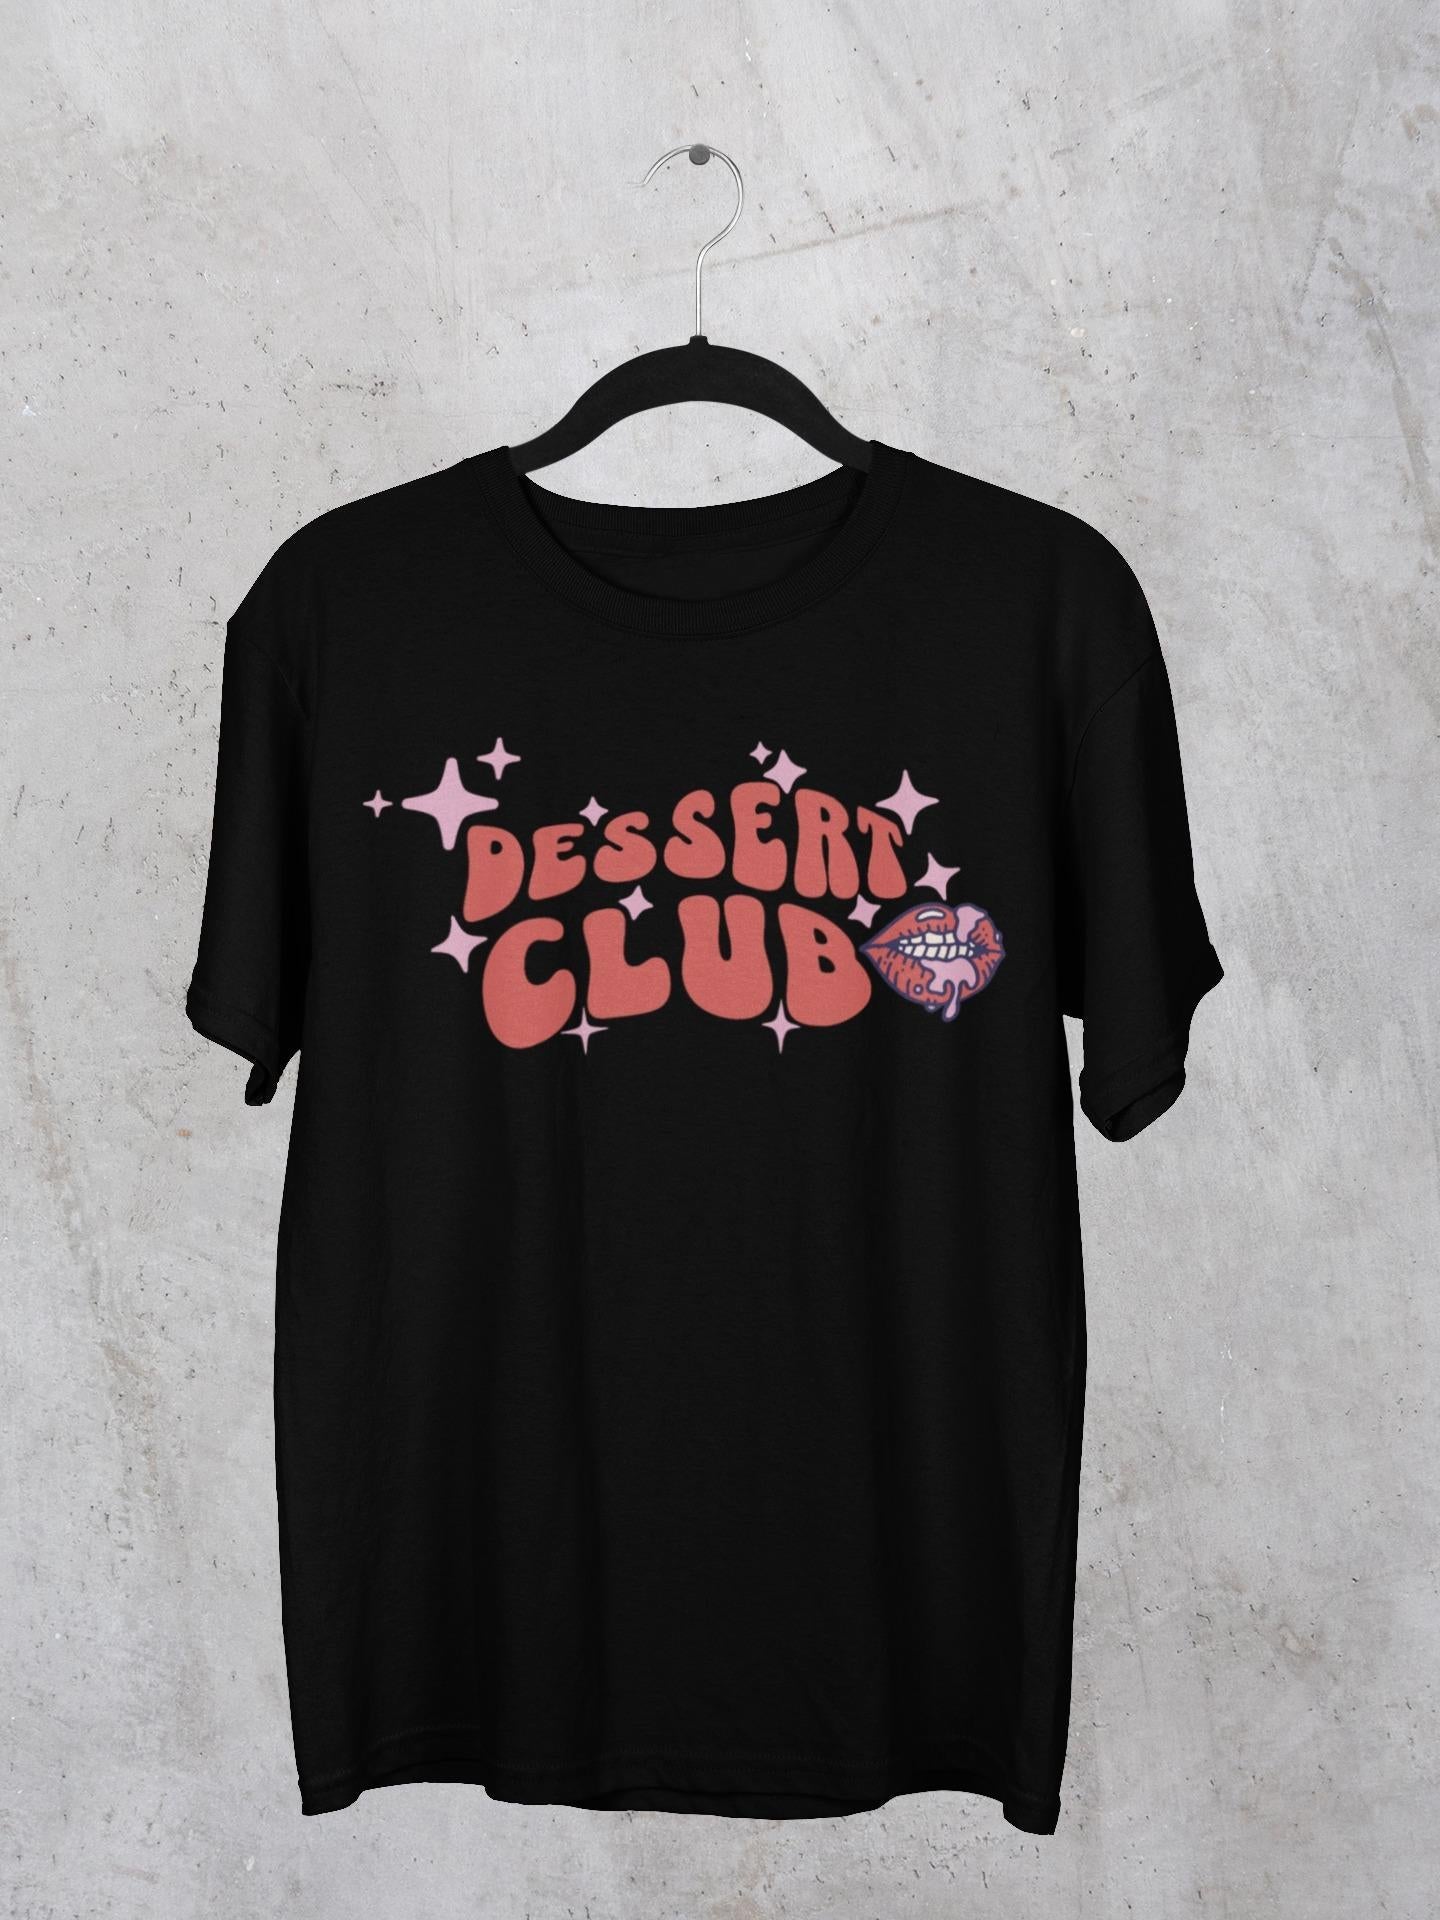 Dessert Club T-Shirt